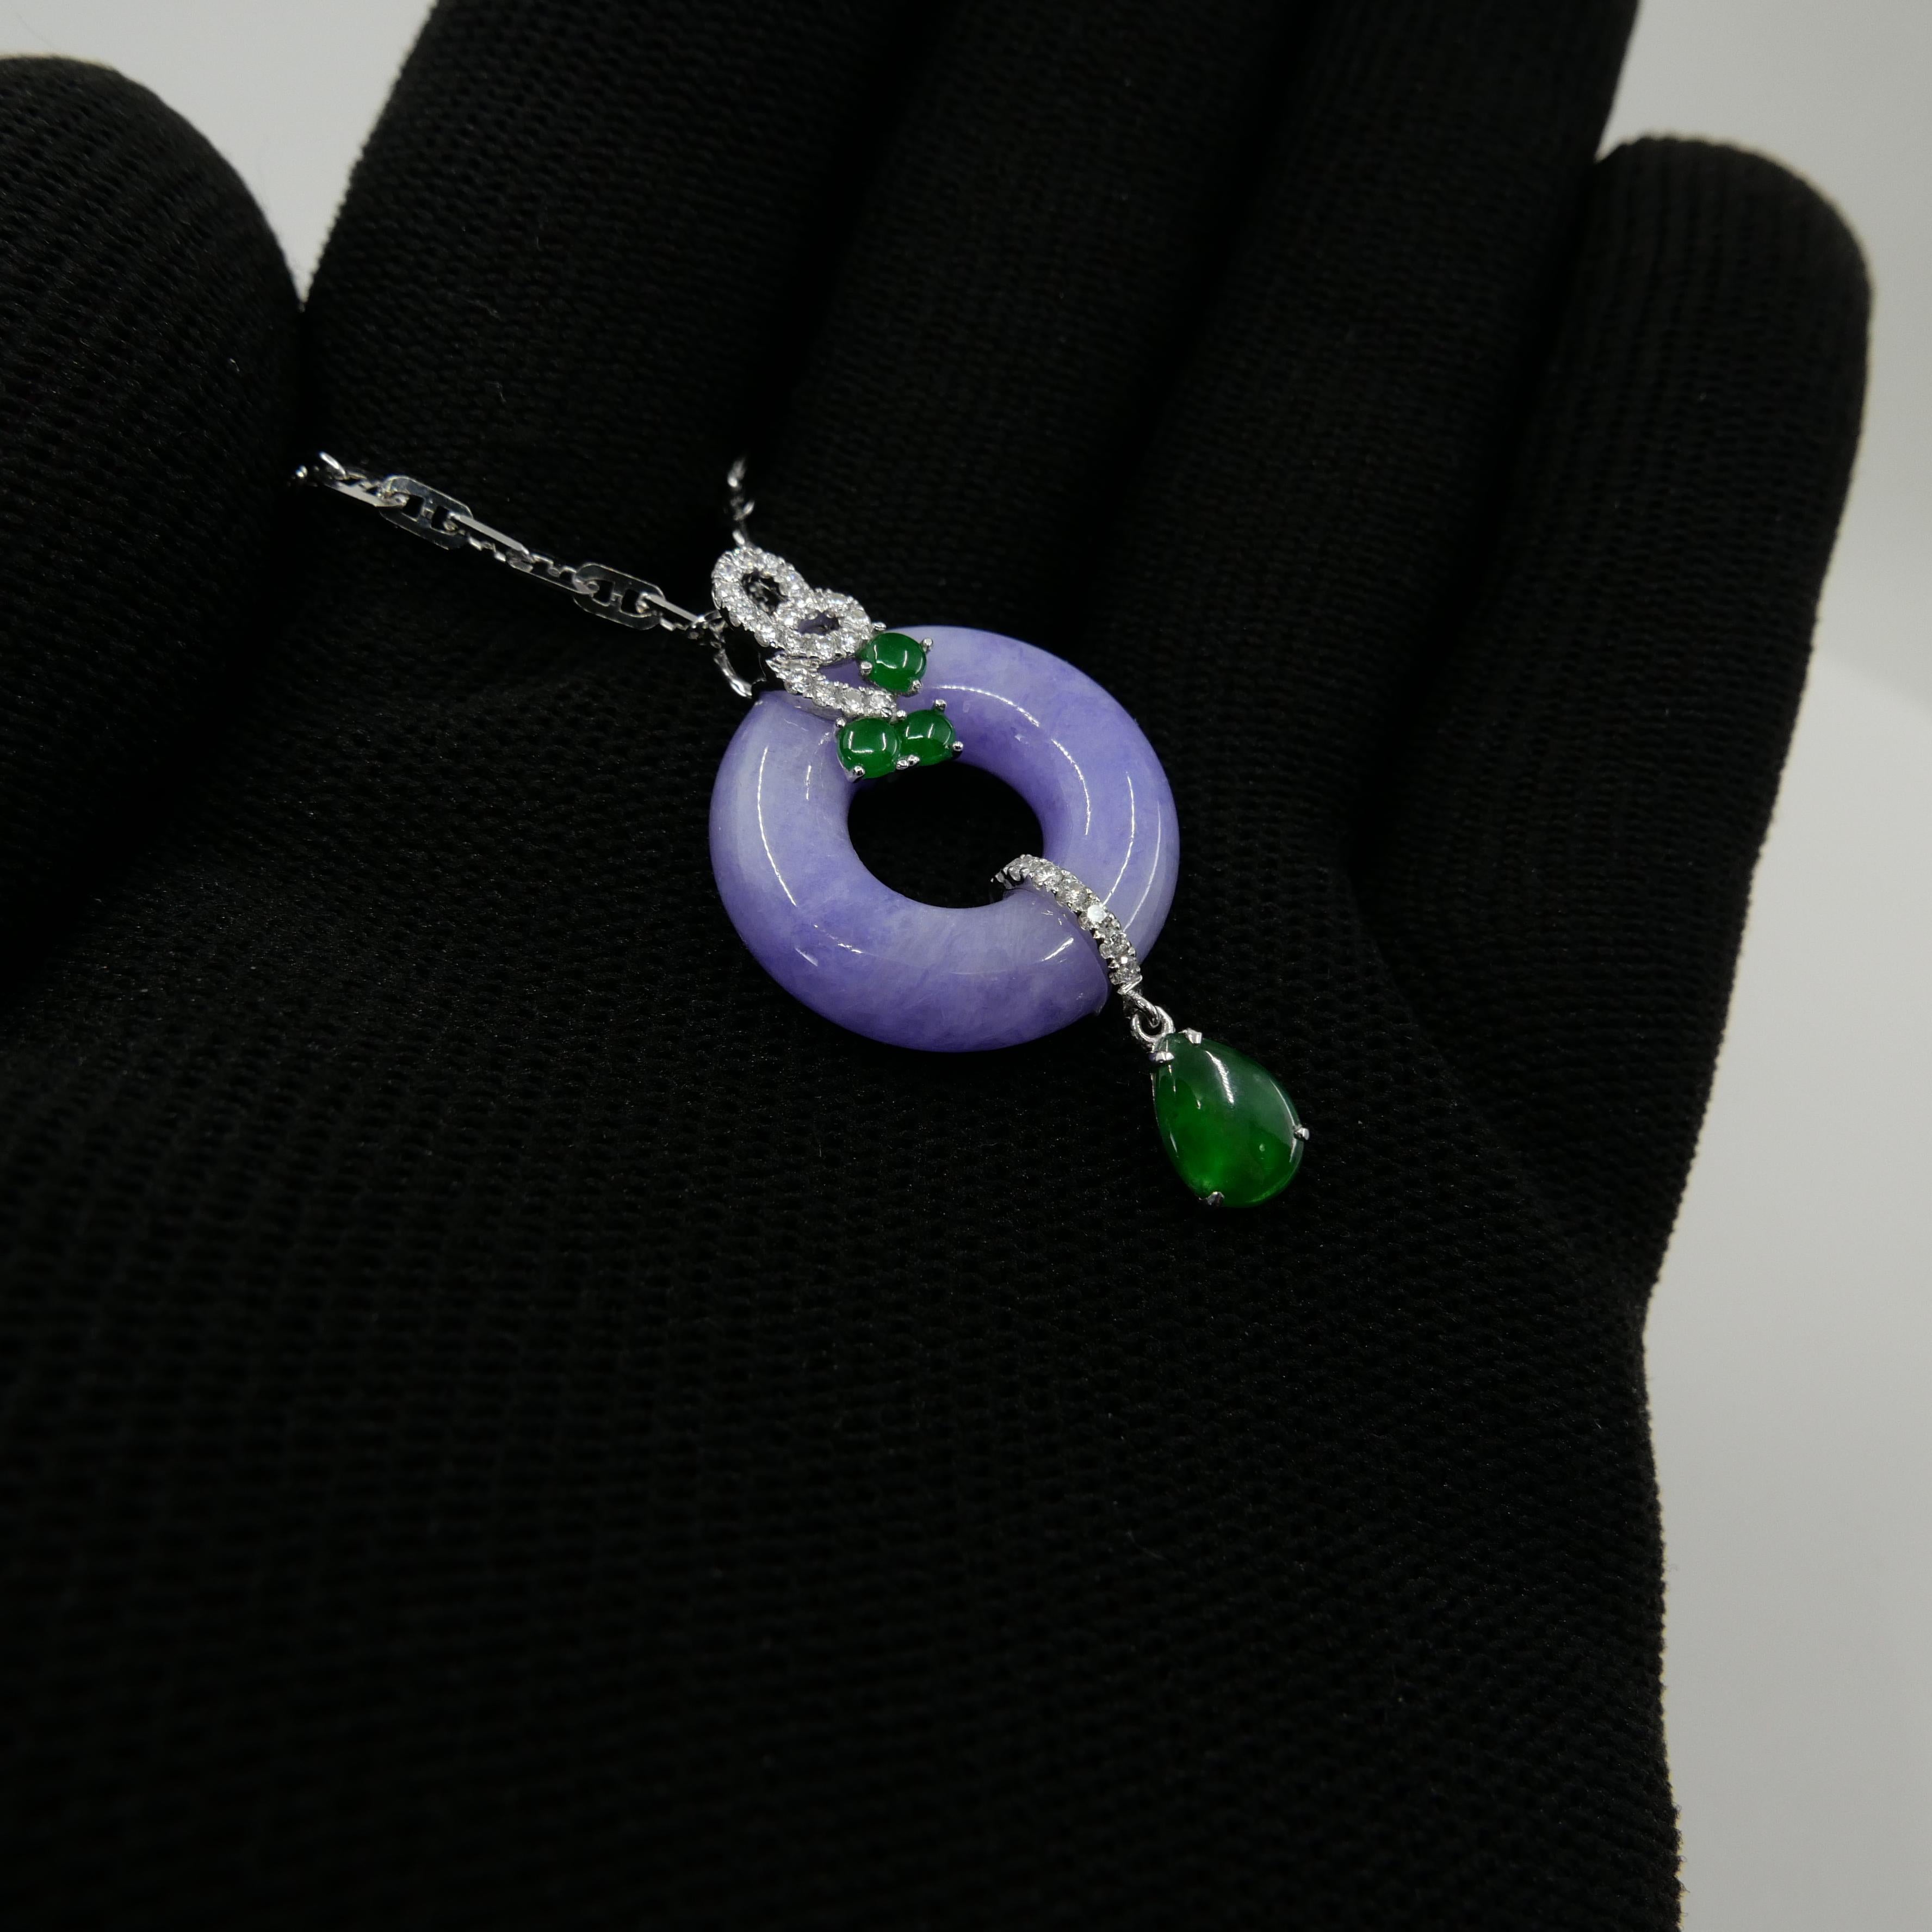 Certified Lavender & Imperial Green Jade Diamond Pendant Drop Necklace.  7